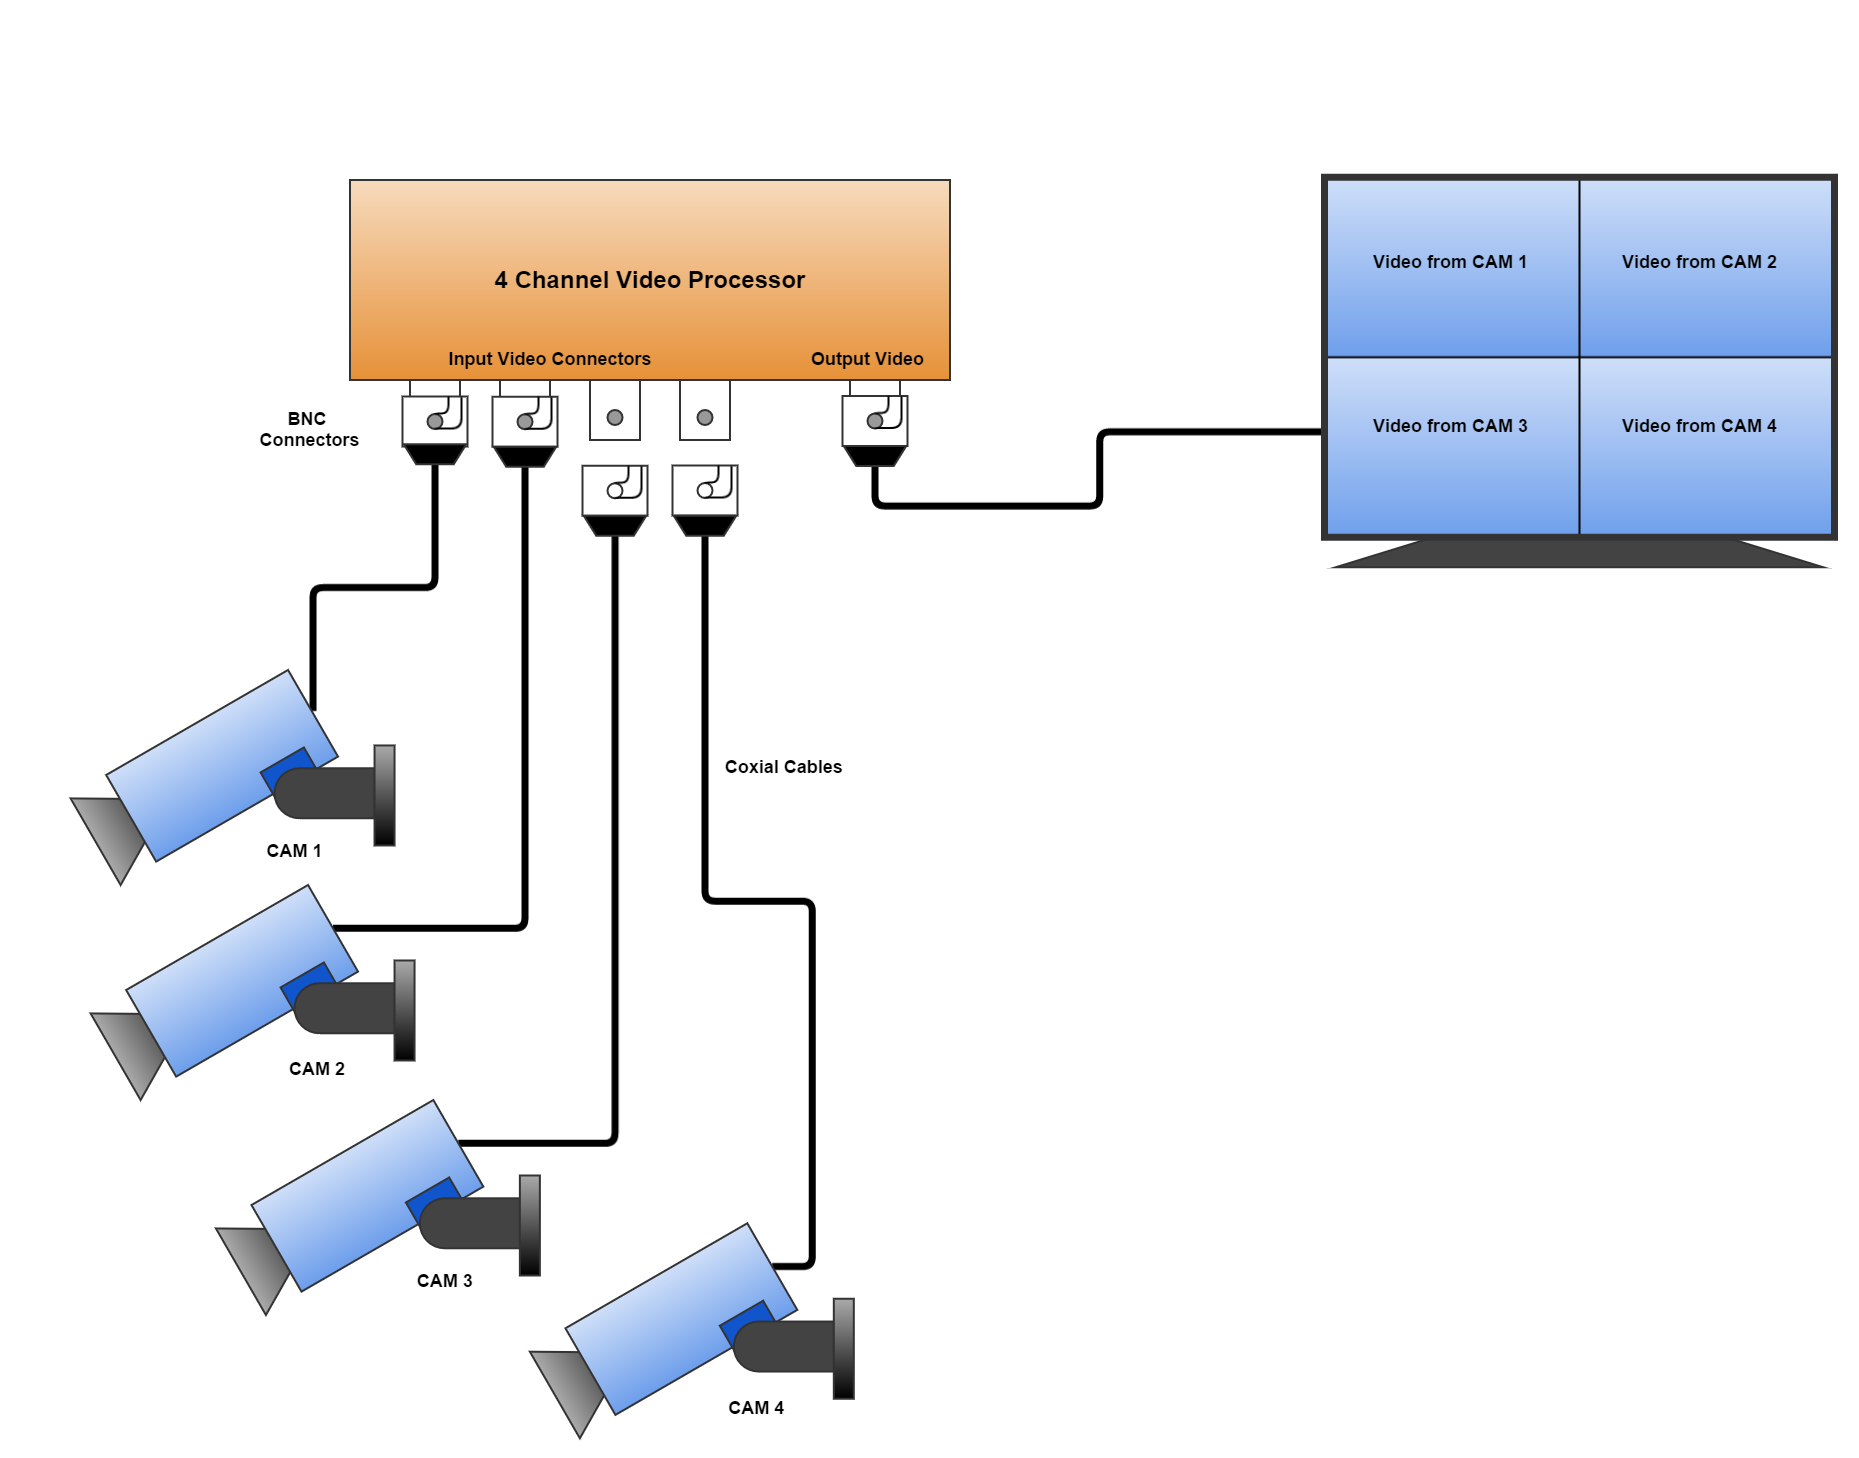 4 channel Video Processor connection diagram